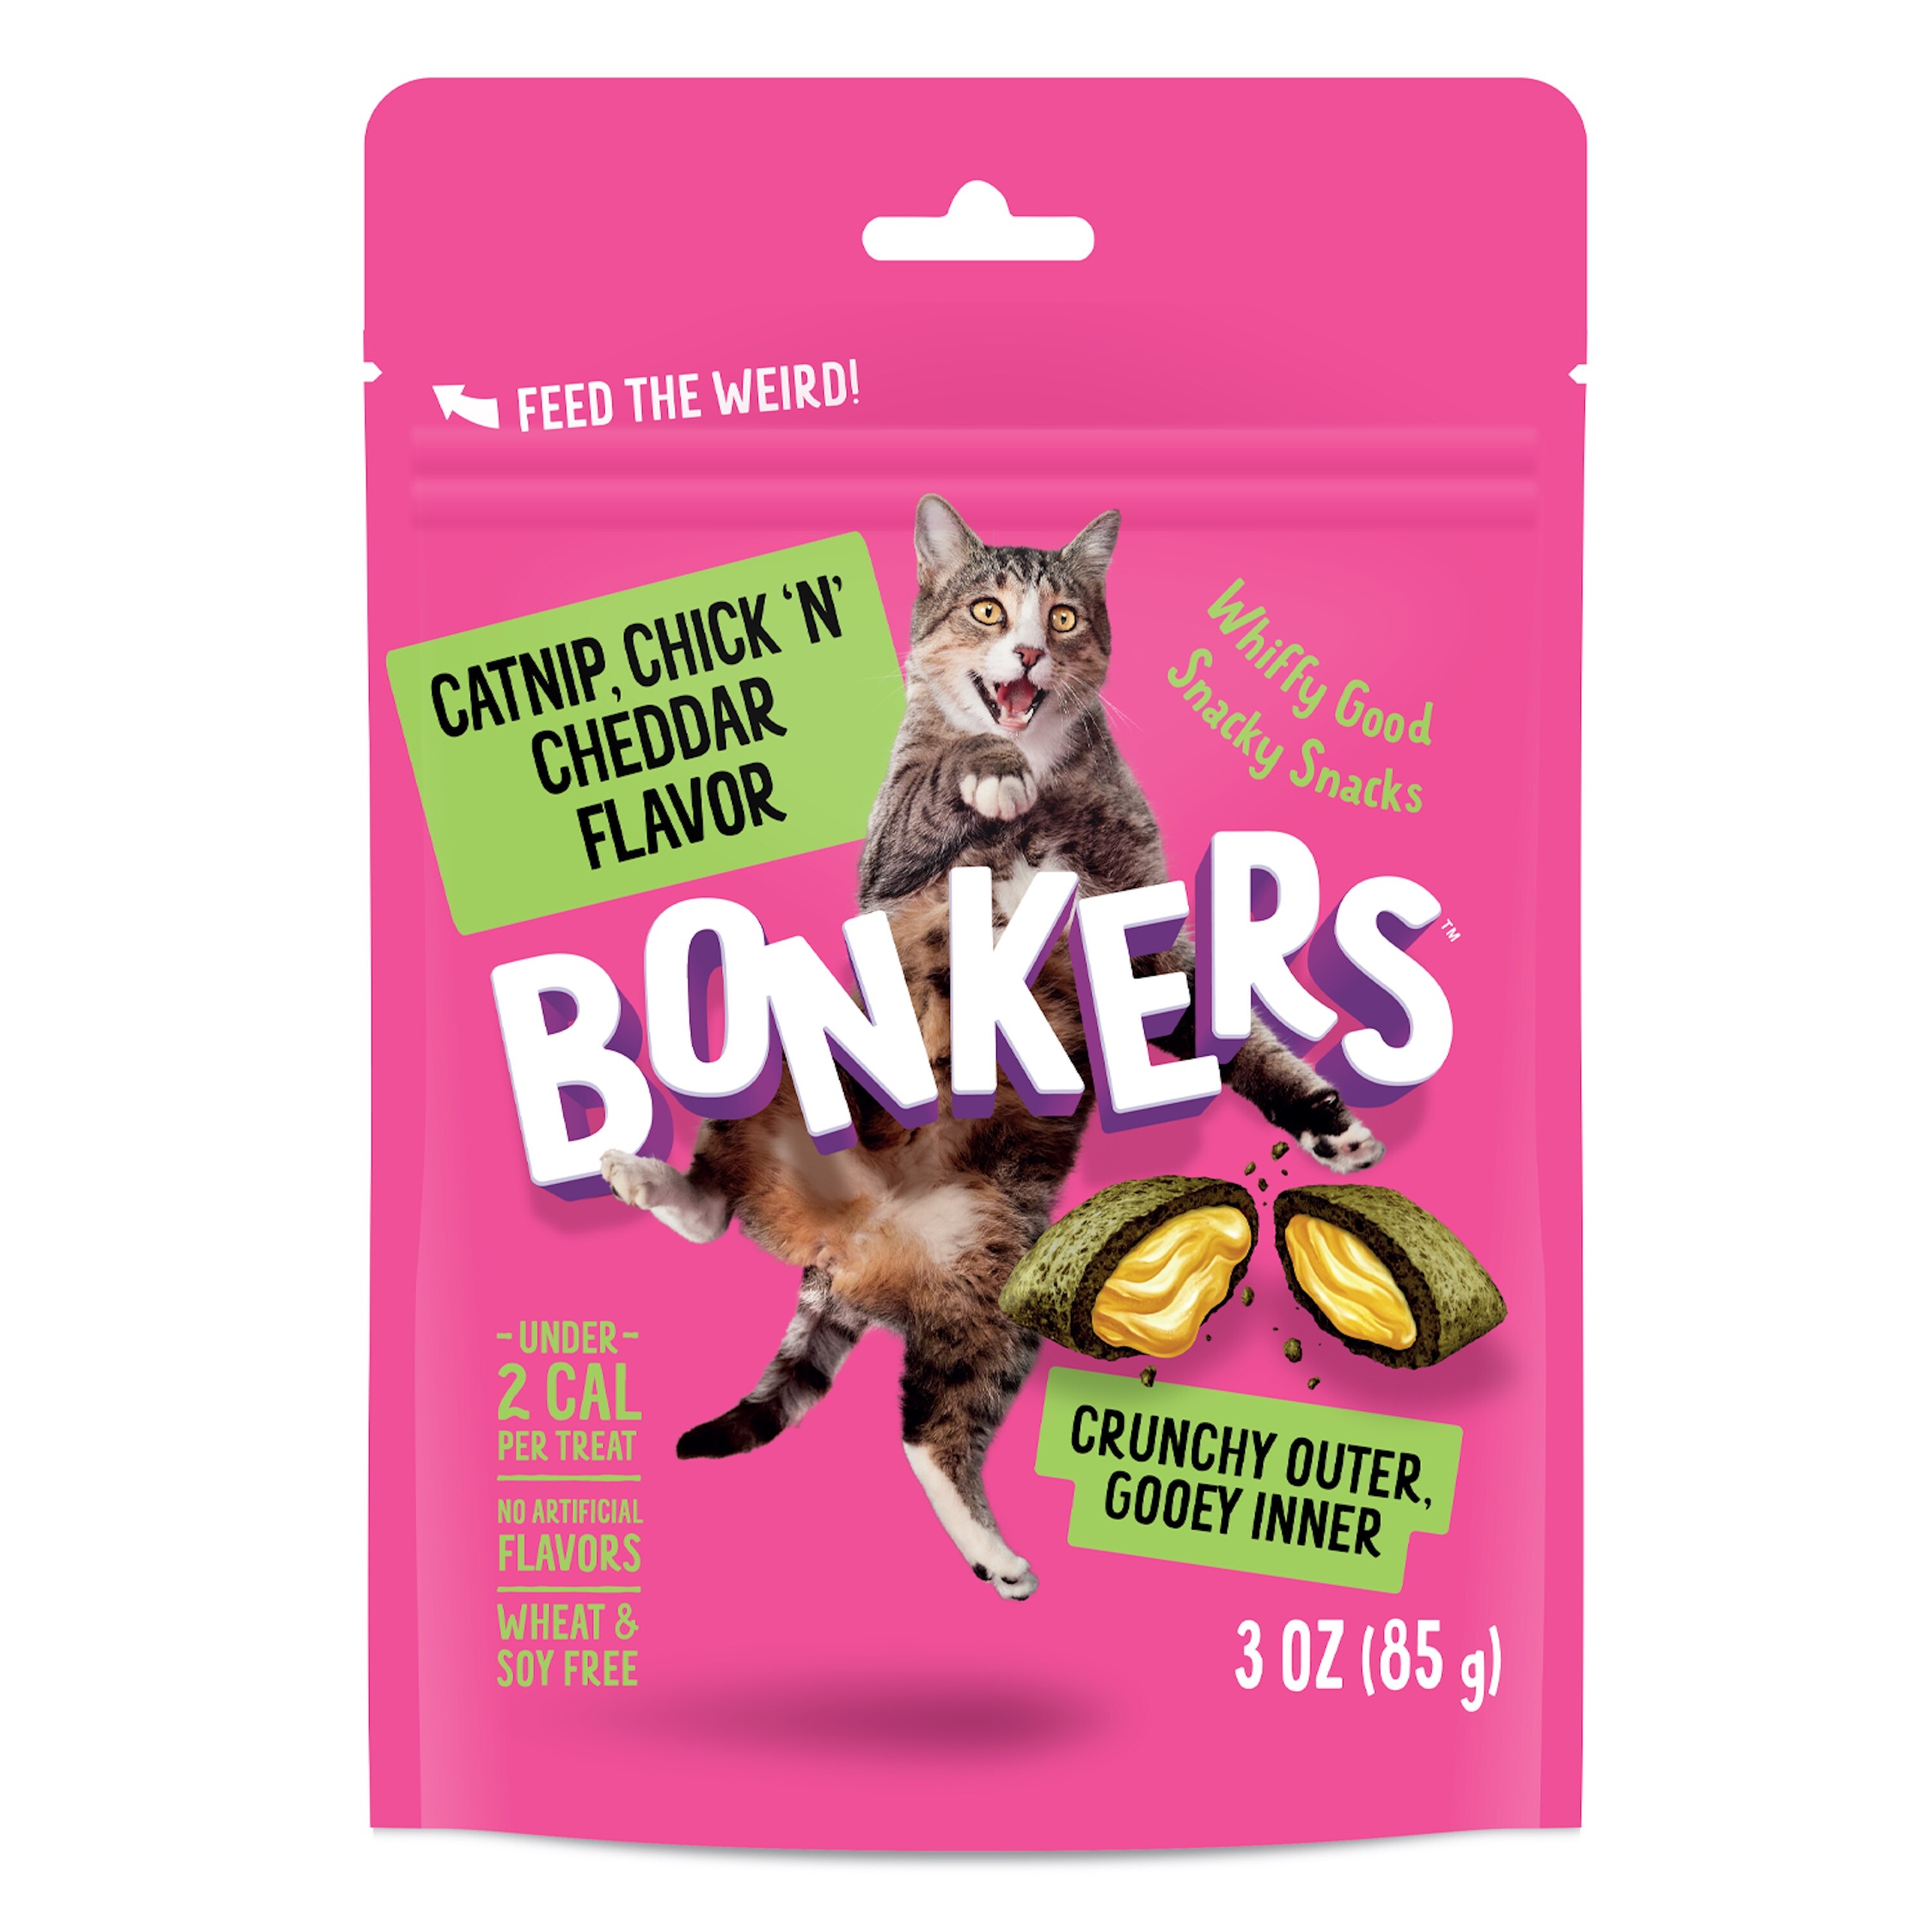 BONKERS Crunchy and Soft Cat Treats, Catnip, Chick N' Cheddar Flavor, 3 OZ